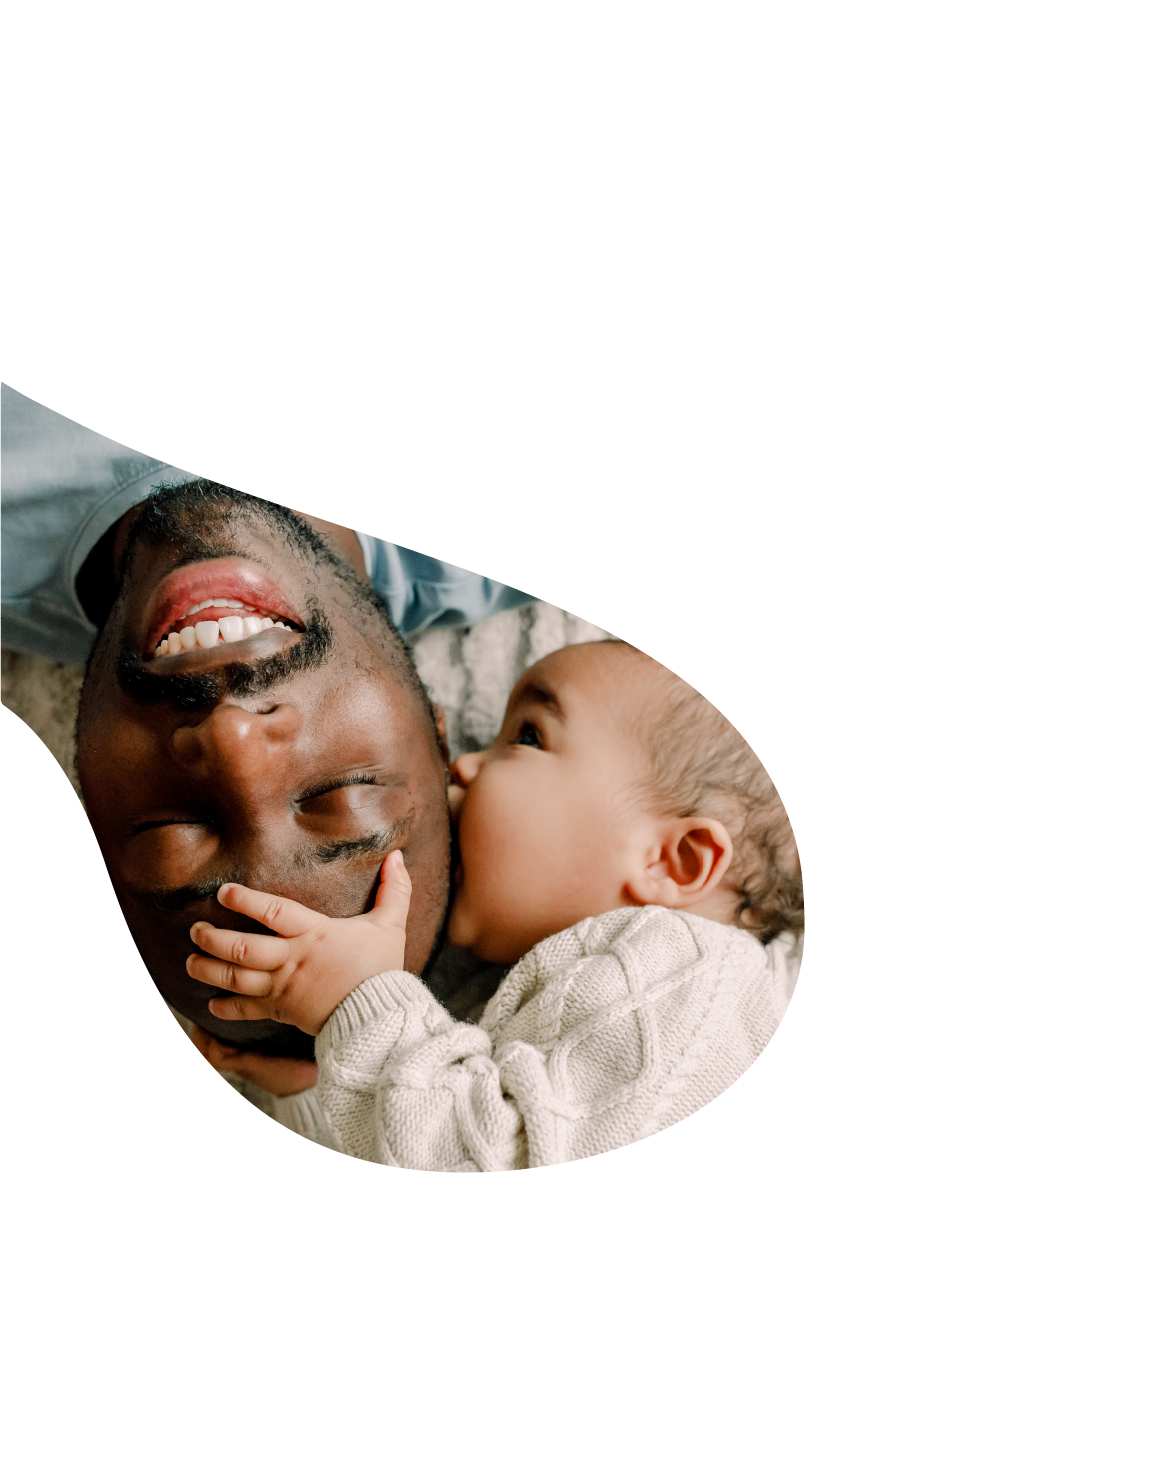 HCSC- An African Amer men smiles as his narrow child hugs his head